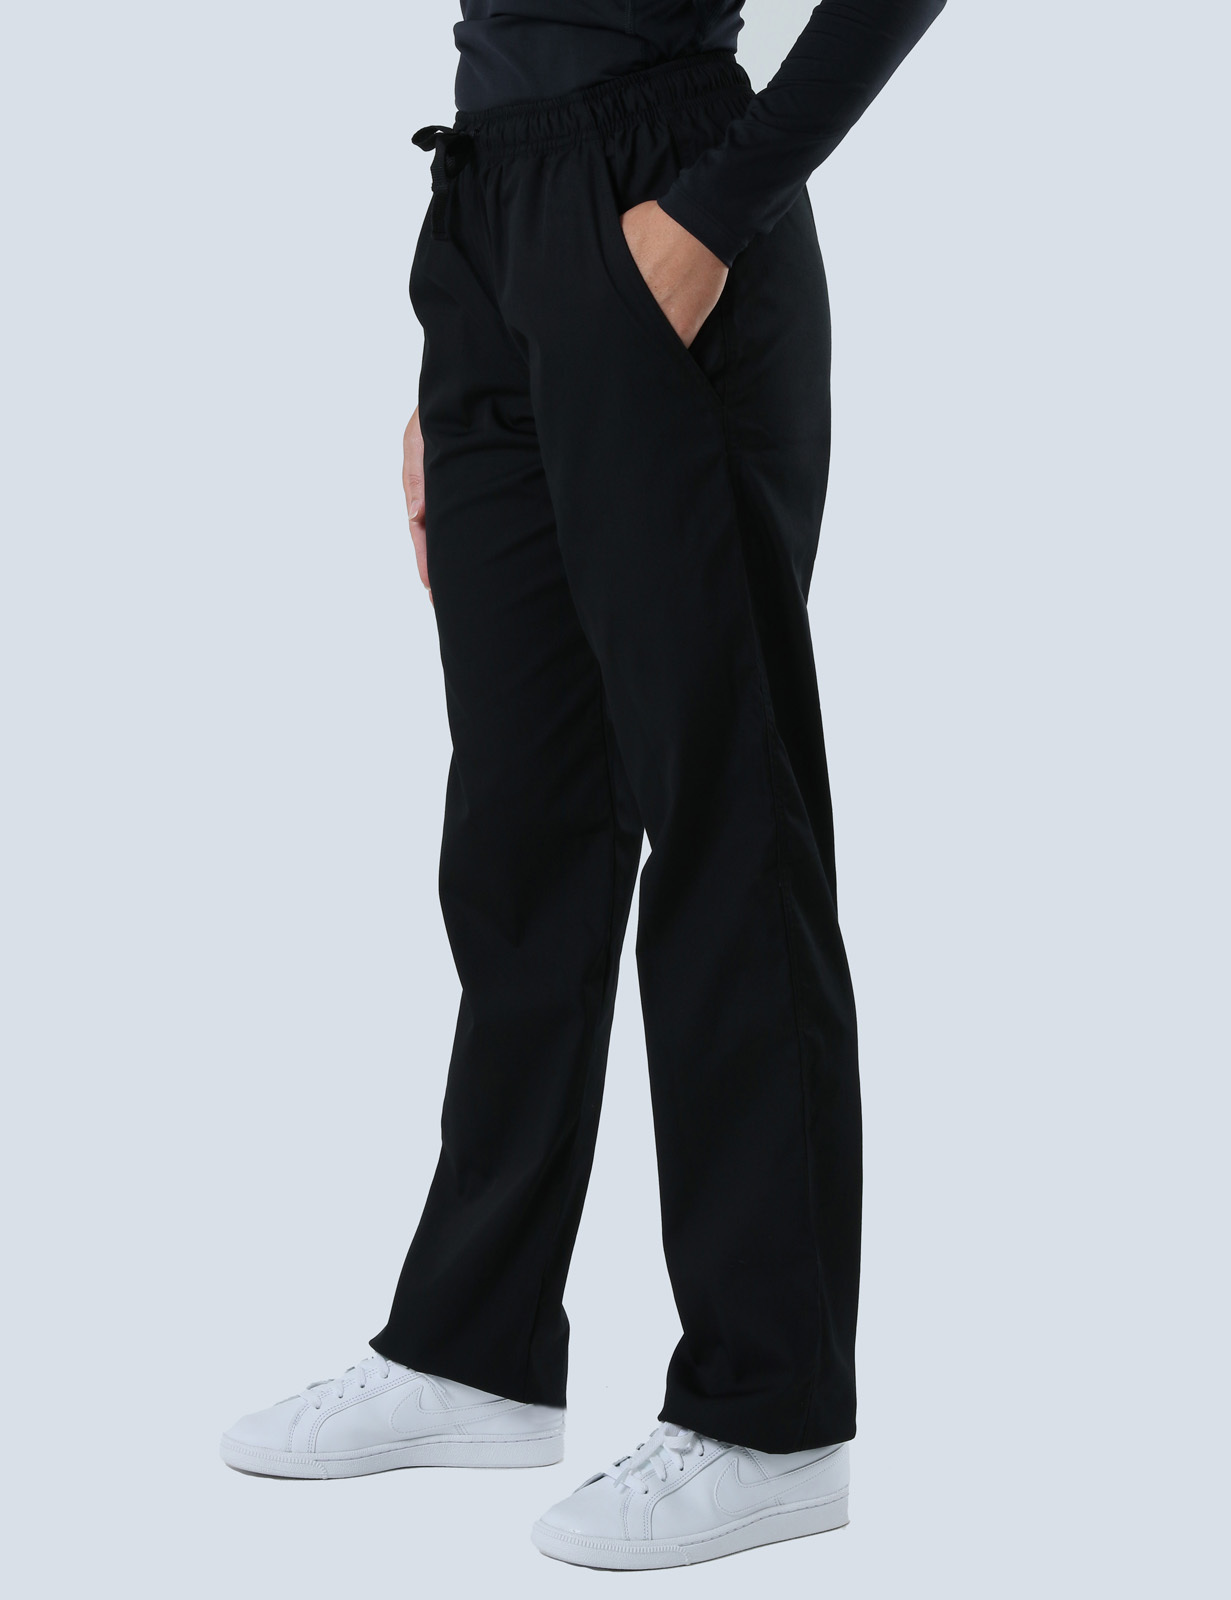 Women's Utility Pants - Black - X Large